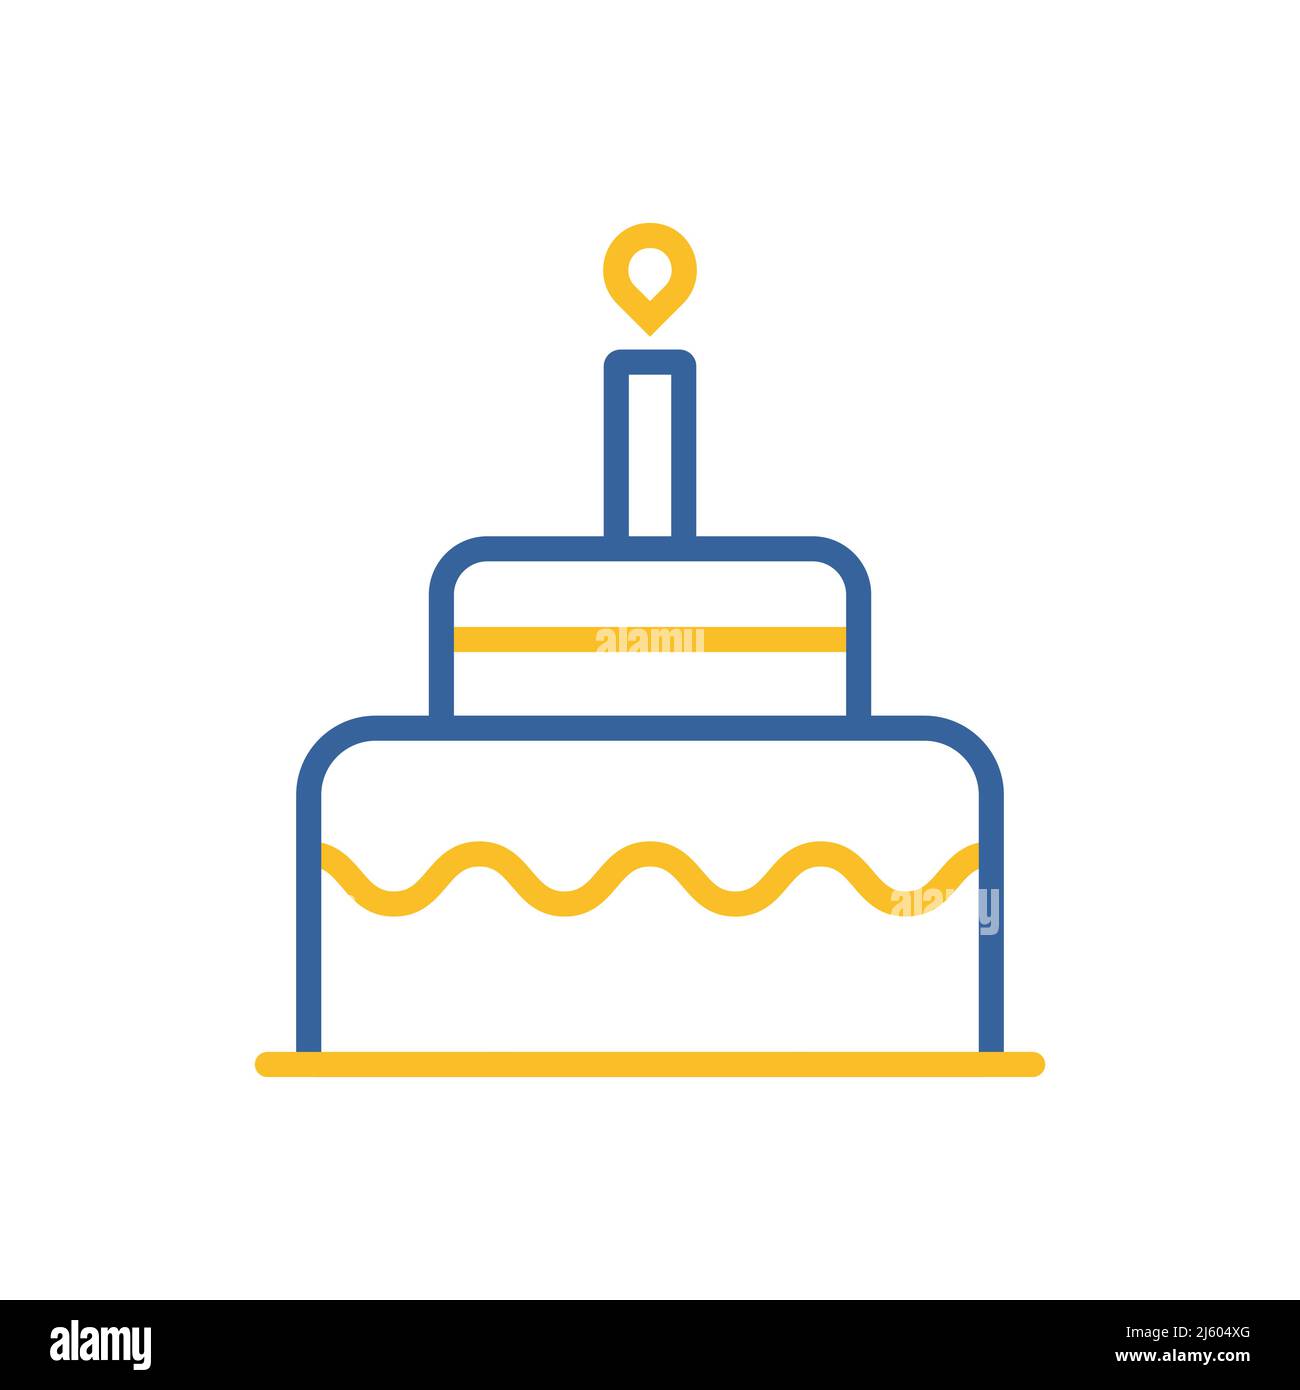 Birthday Cake Design Ideas – Apps on Google Play